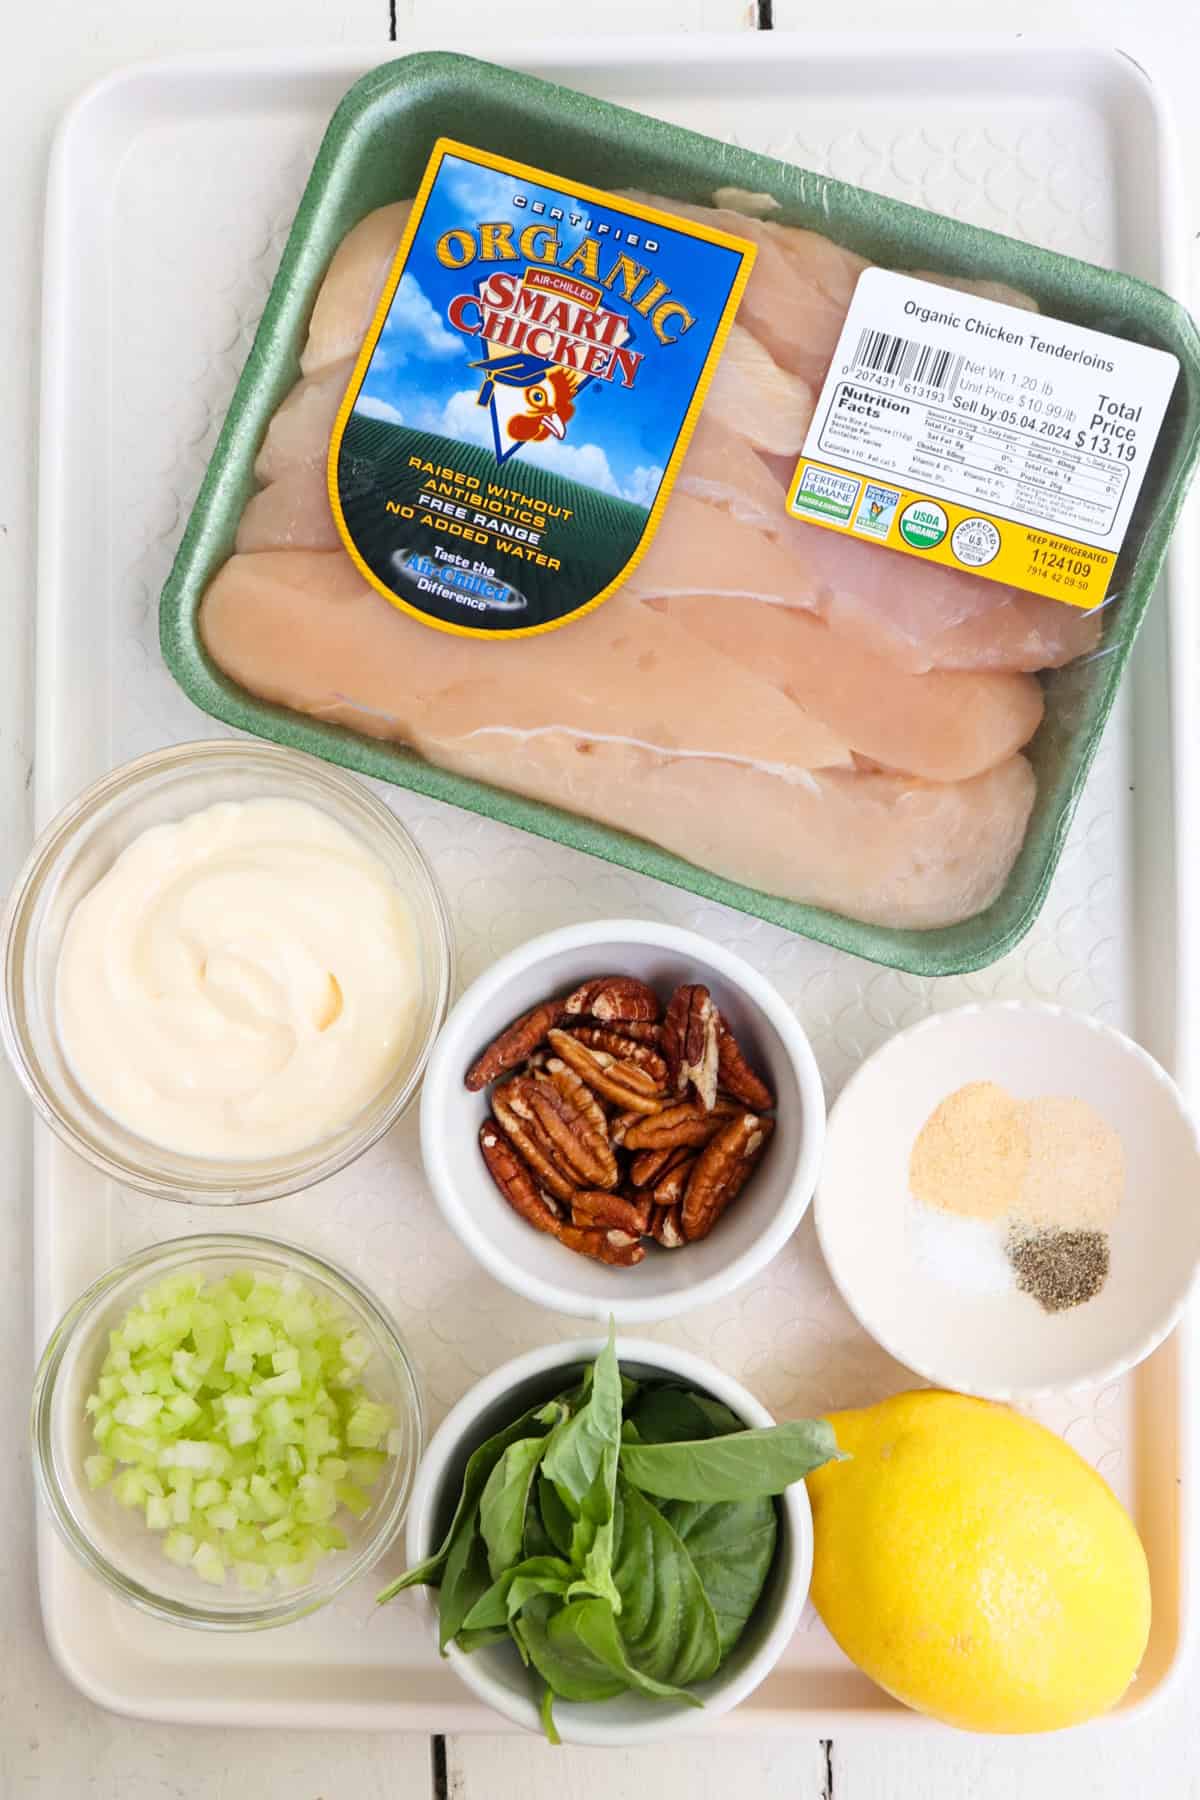 ingredients for chicken salad chick's lemon chicken salad.